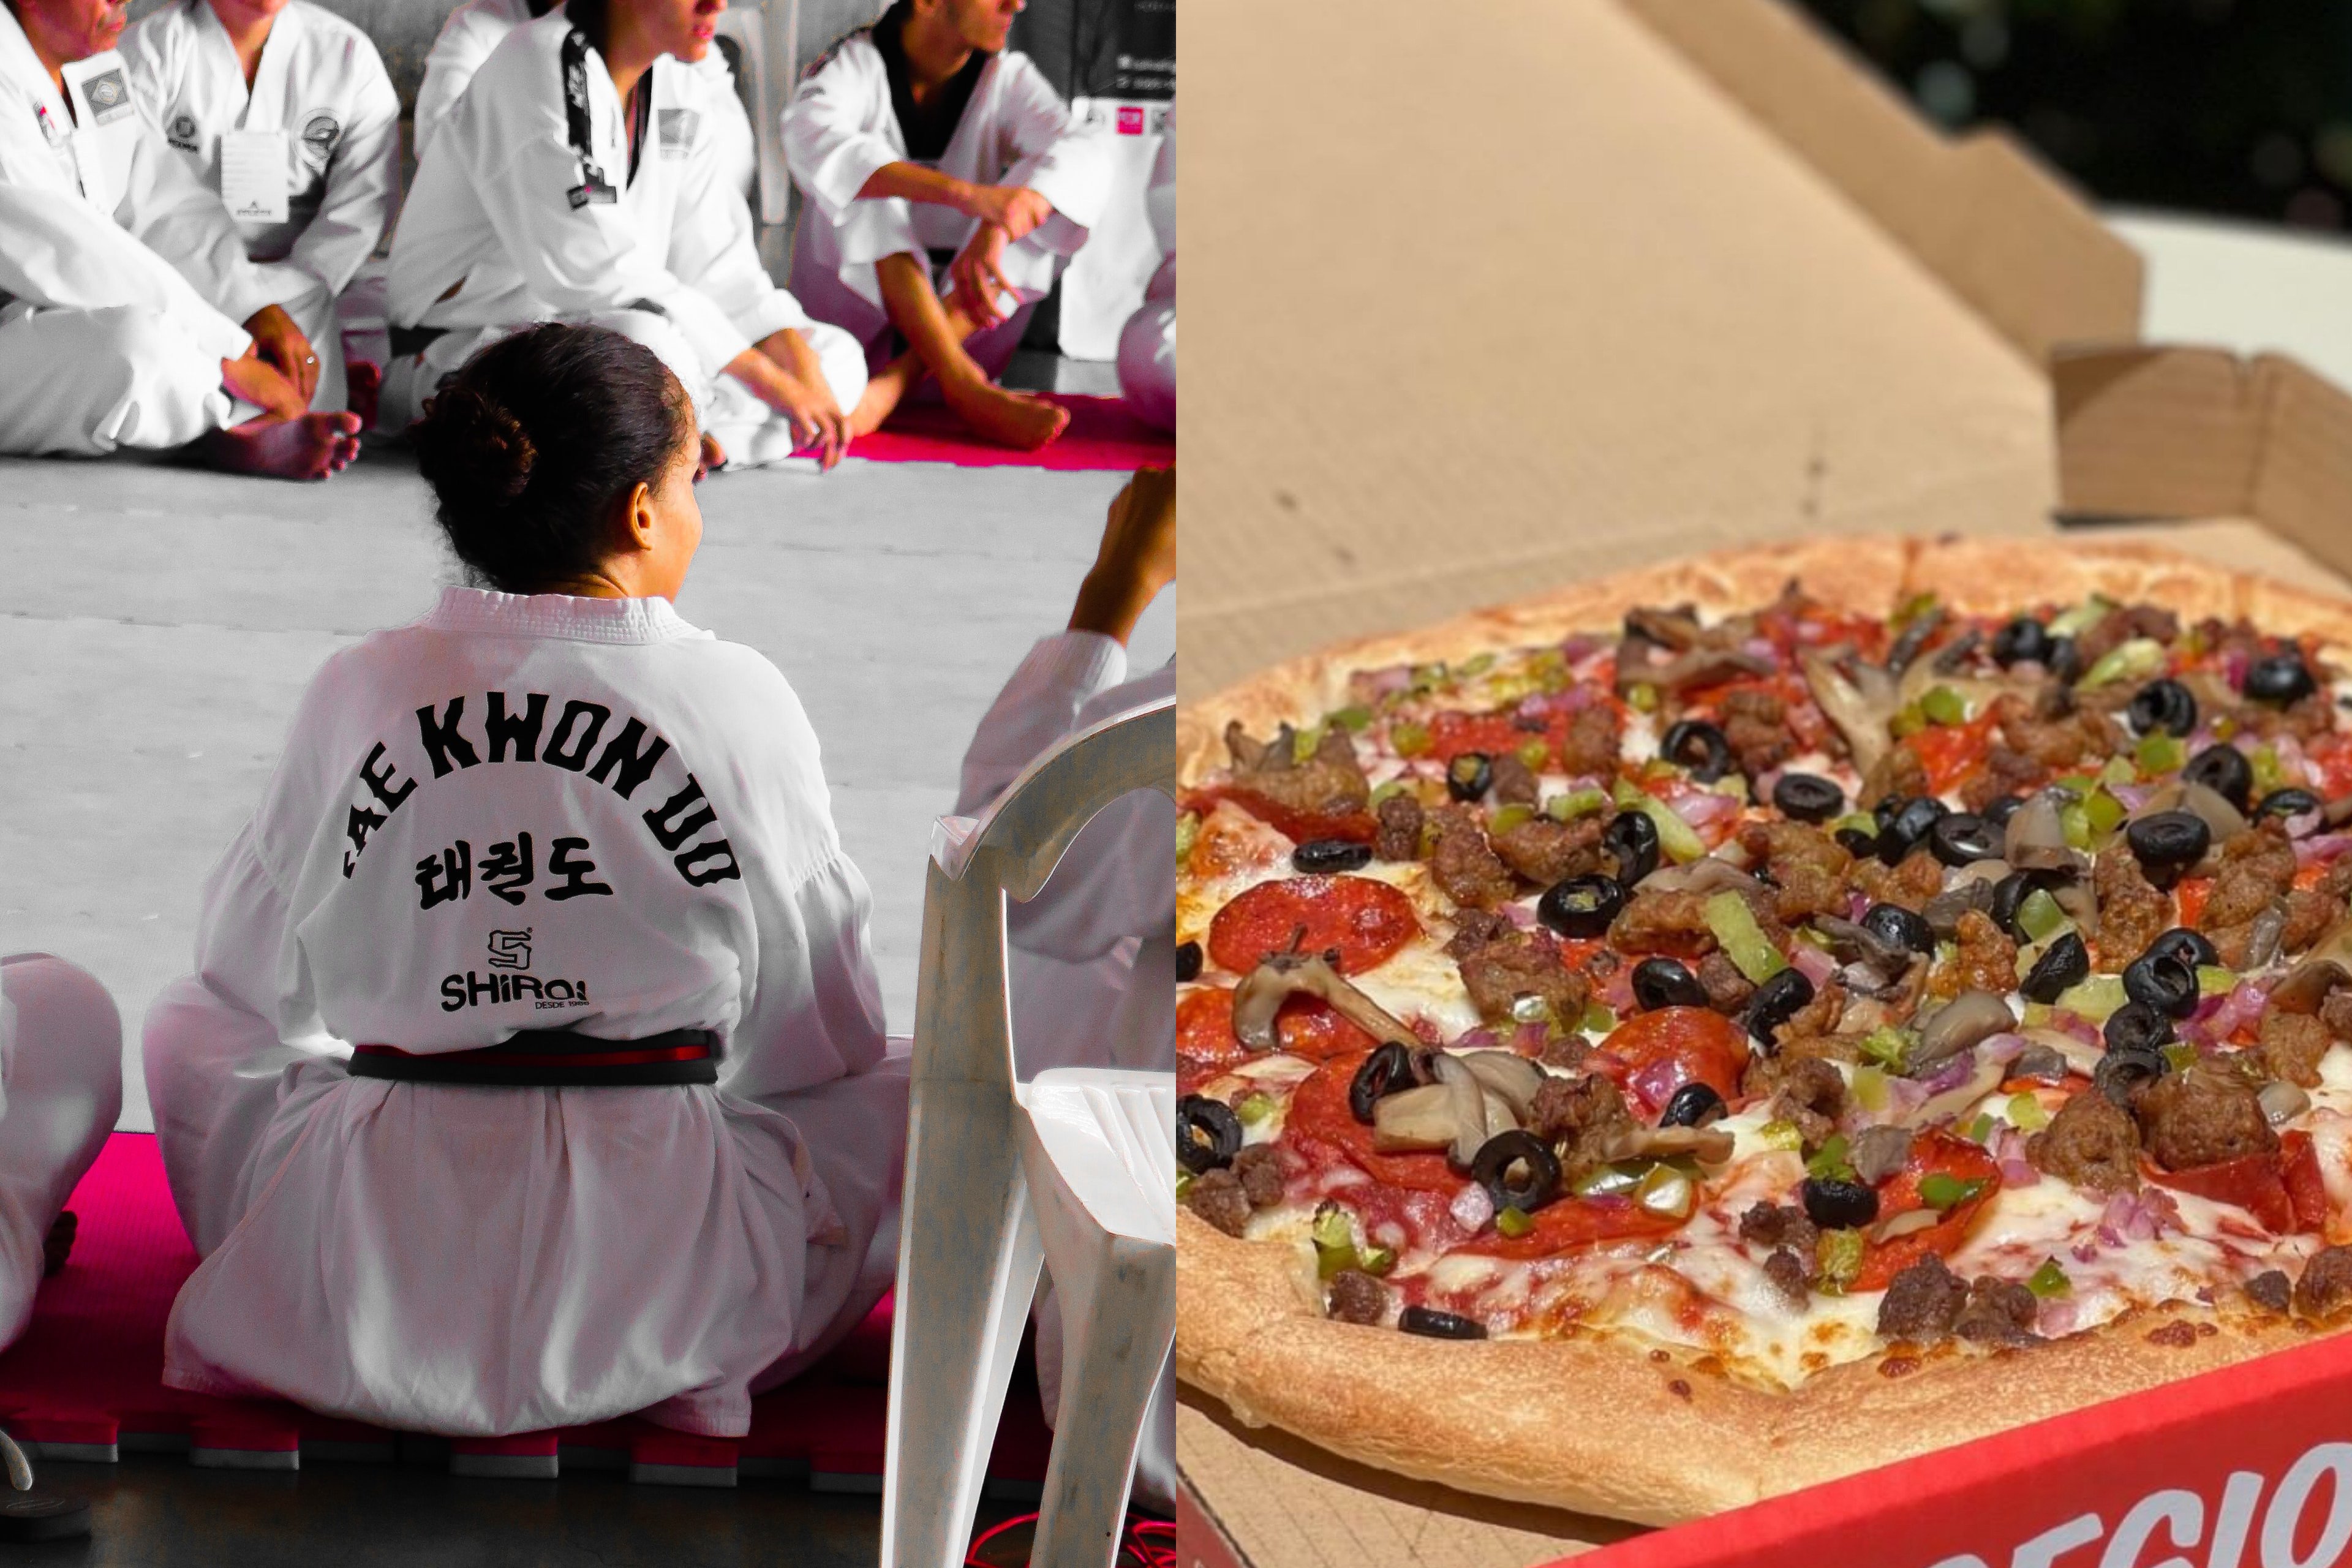 Taekwondo students sitting on a mat alongside a box of Supreme Pizza | Source: Unsplash - Instagram